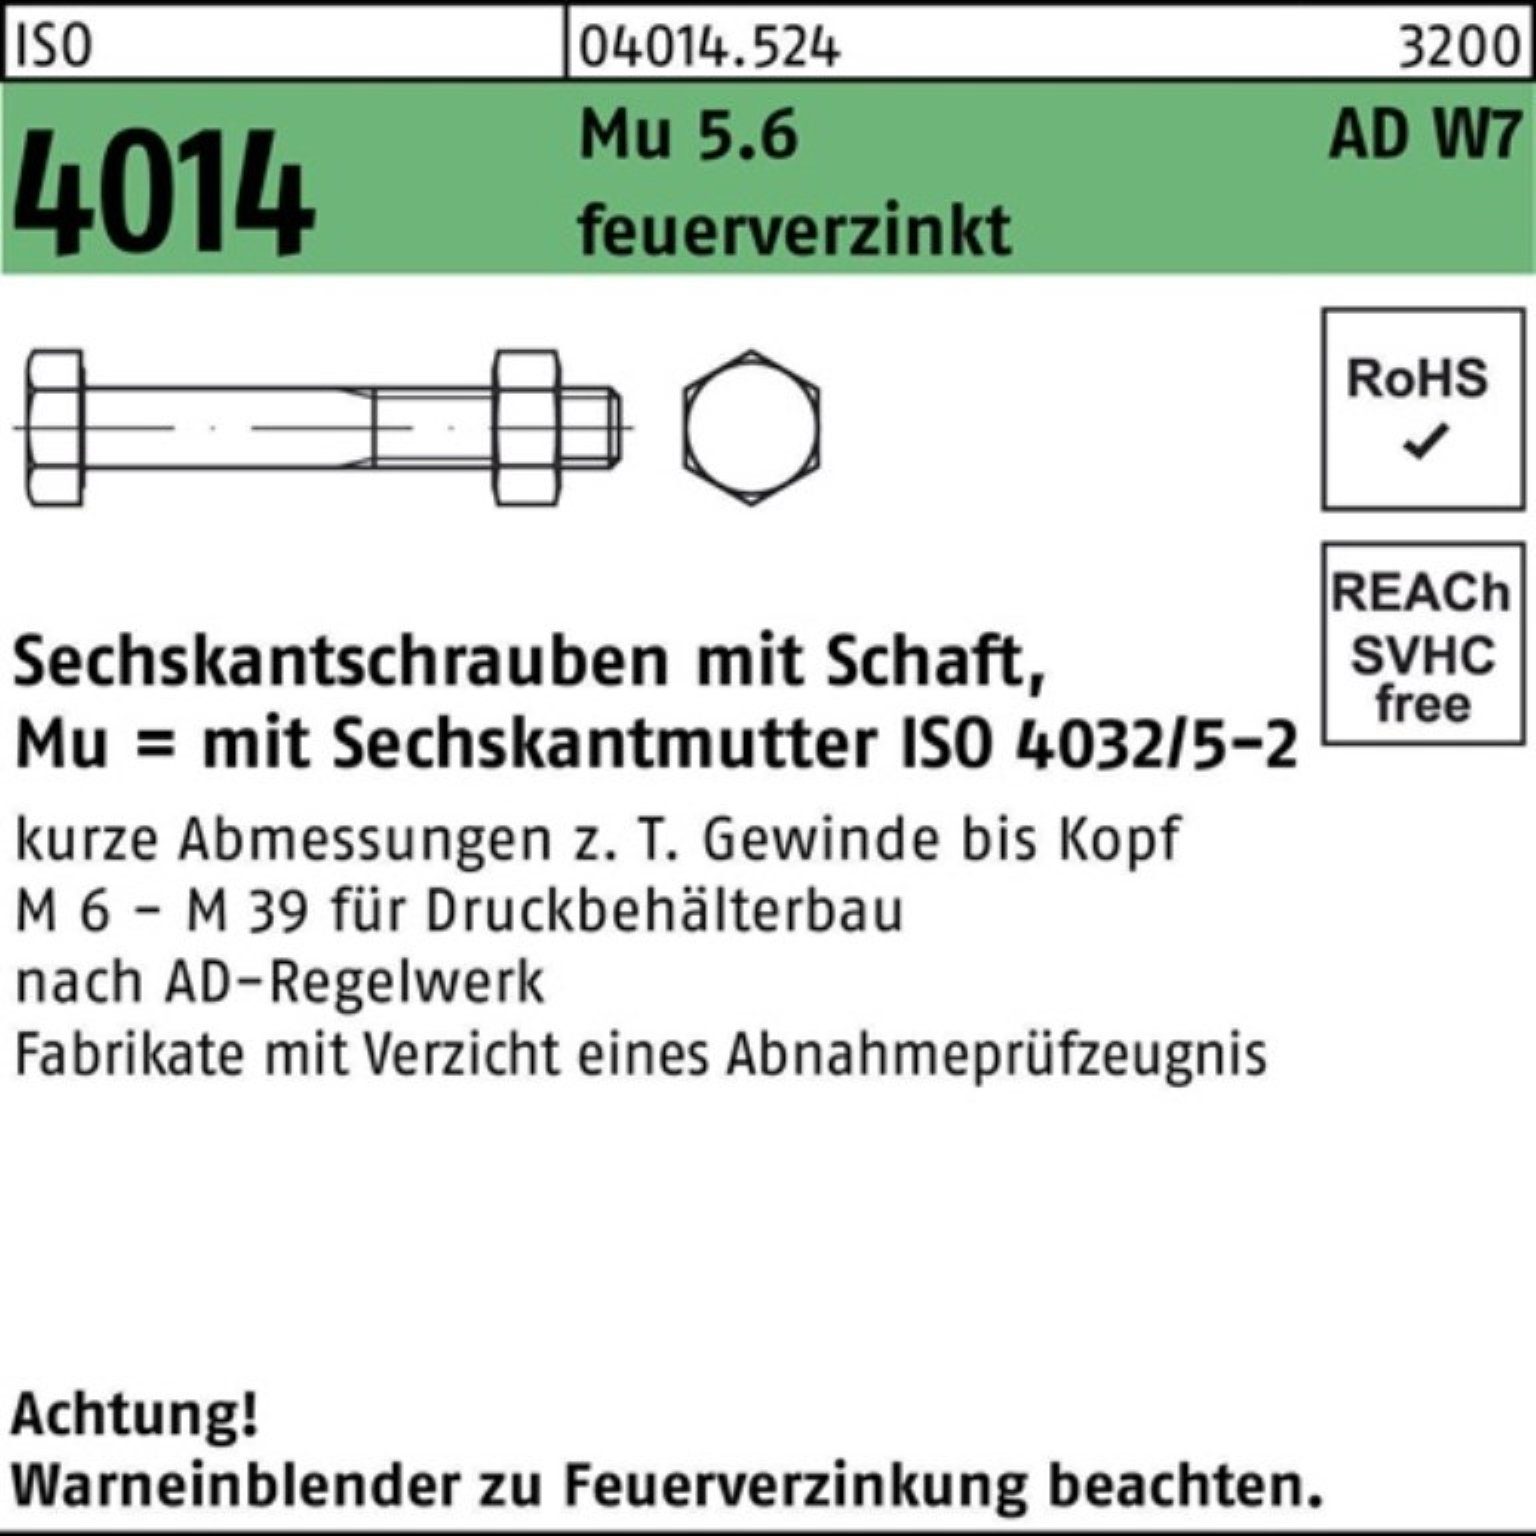 Bufab Sechskantschraube 100er Pack Sechskantschraube ISO 4014 Schaft M24x 100 Mu 5.6 W7 feuerv